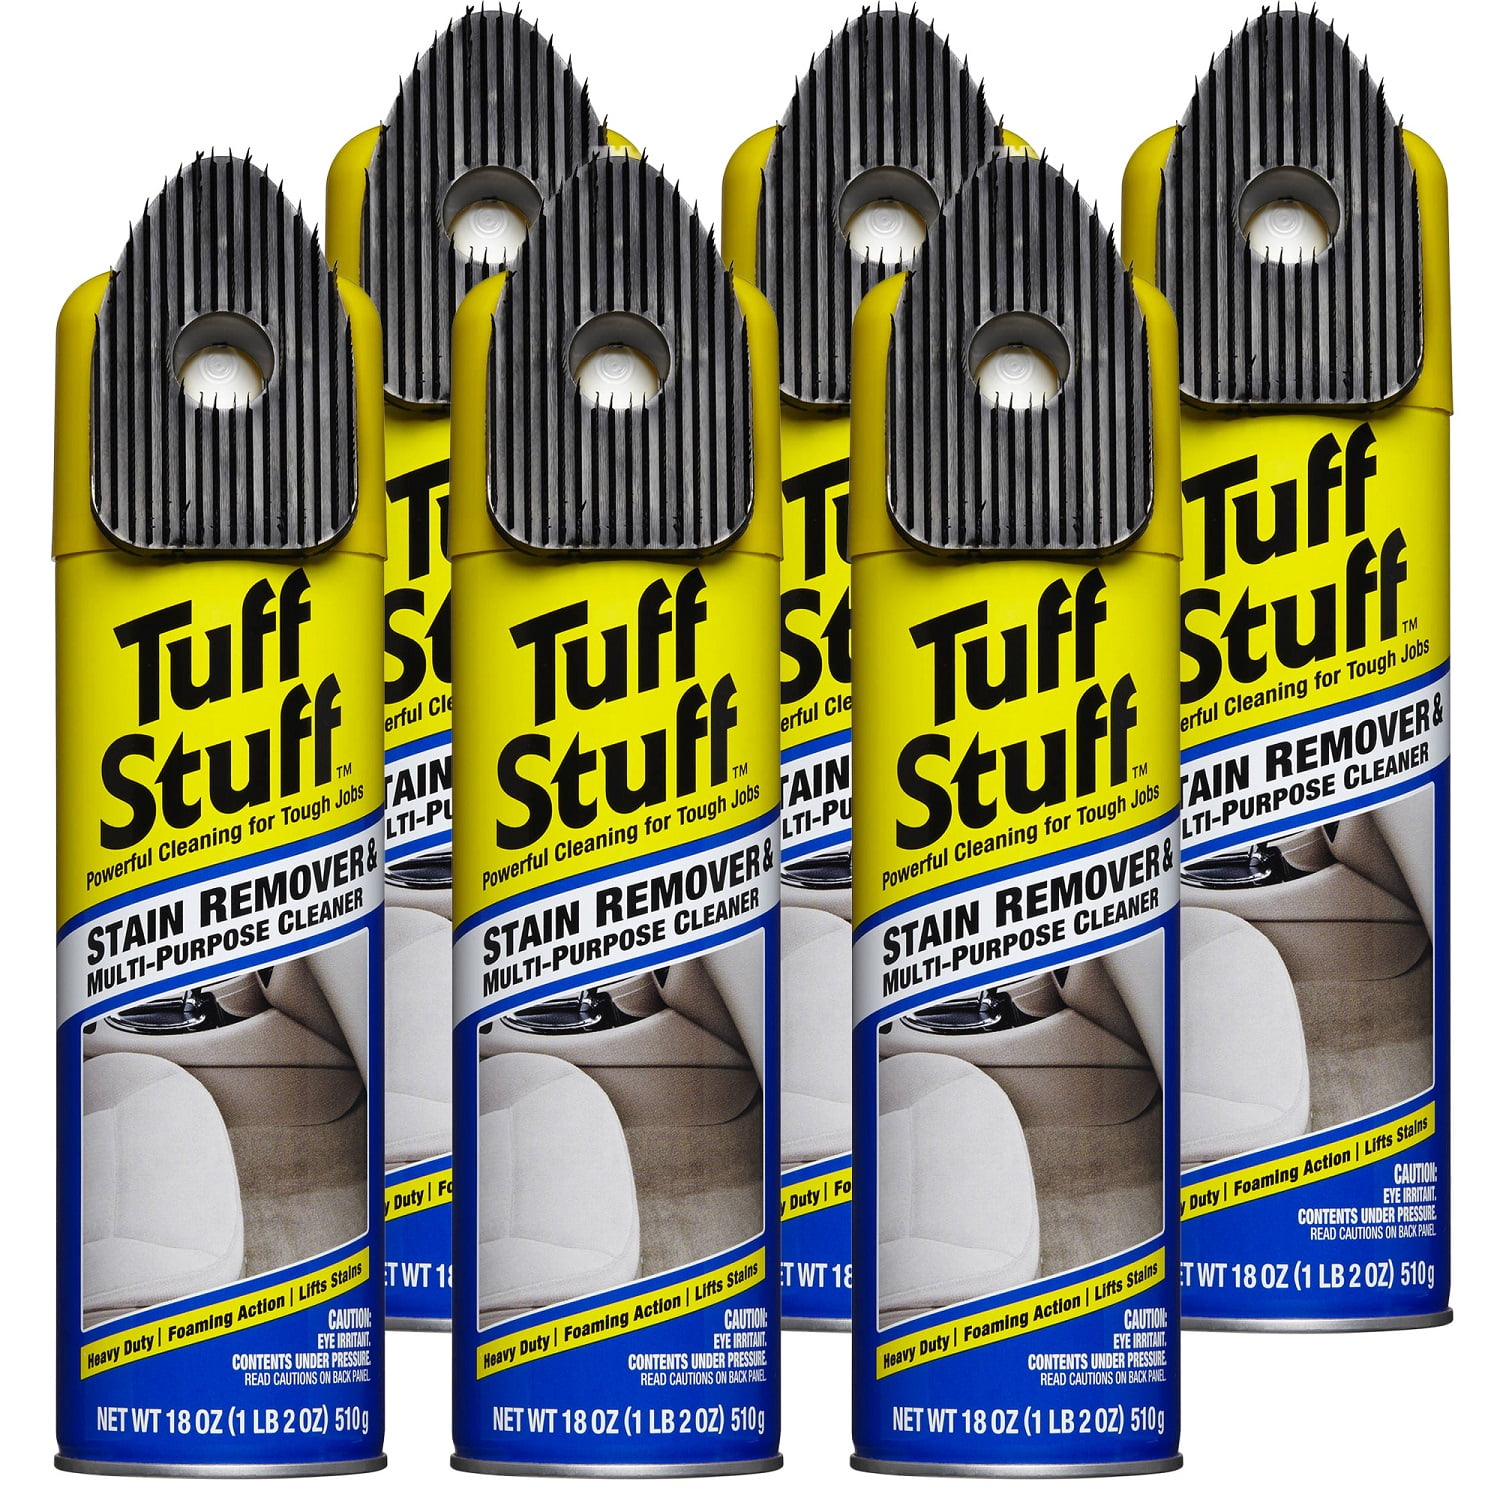 Tuff Stuff Multi Purpose Foam Cleaner 22 ounces 13146 (Pack of two)